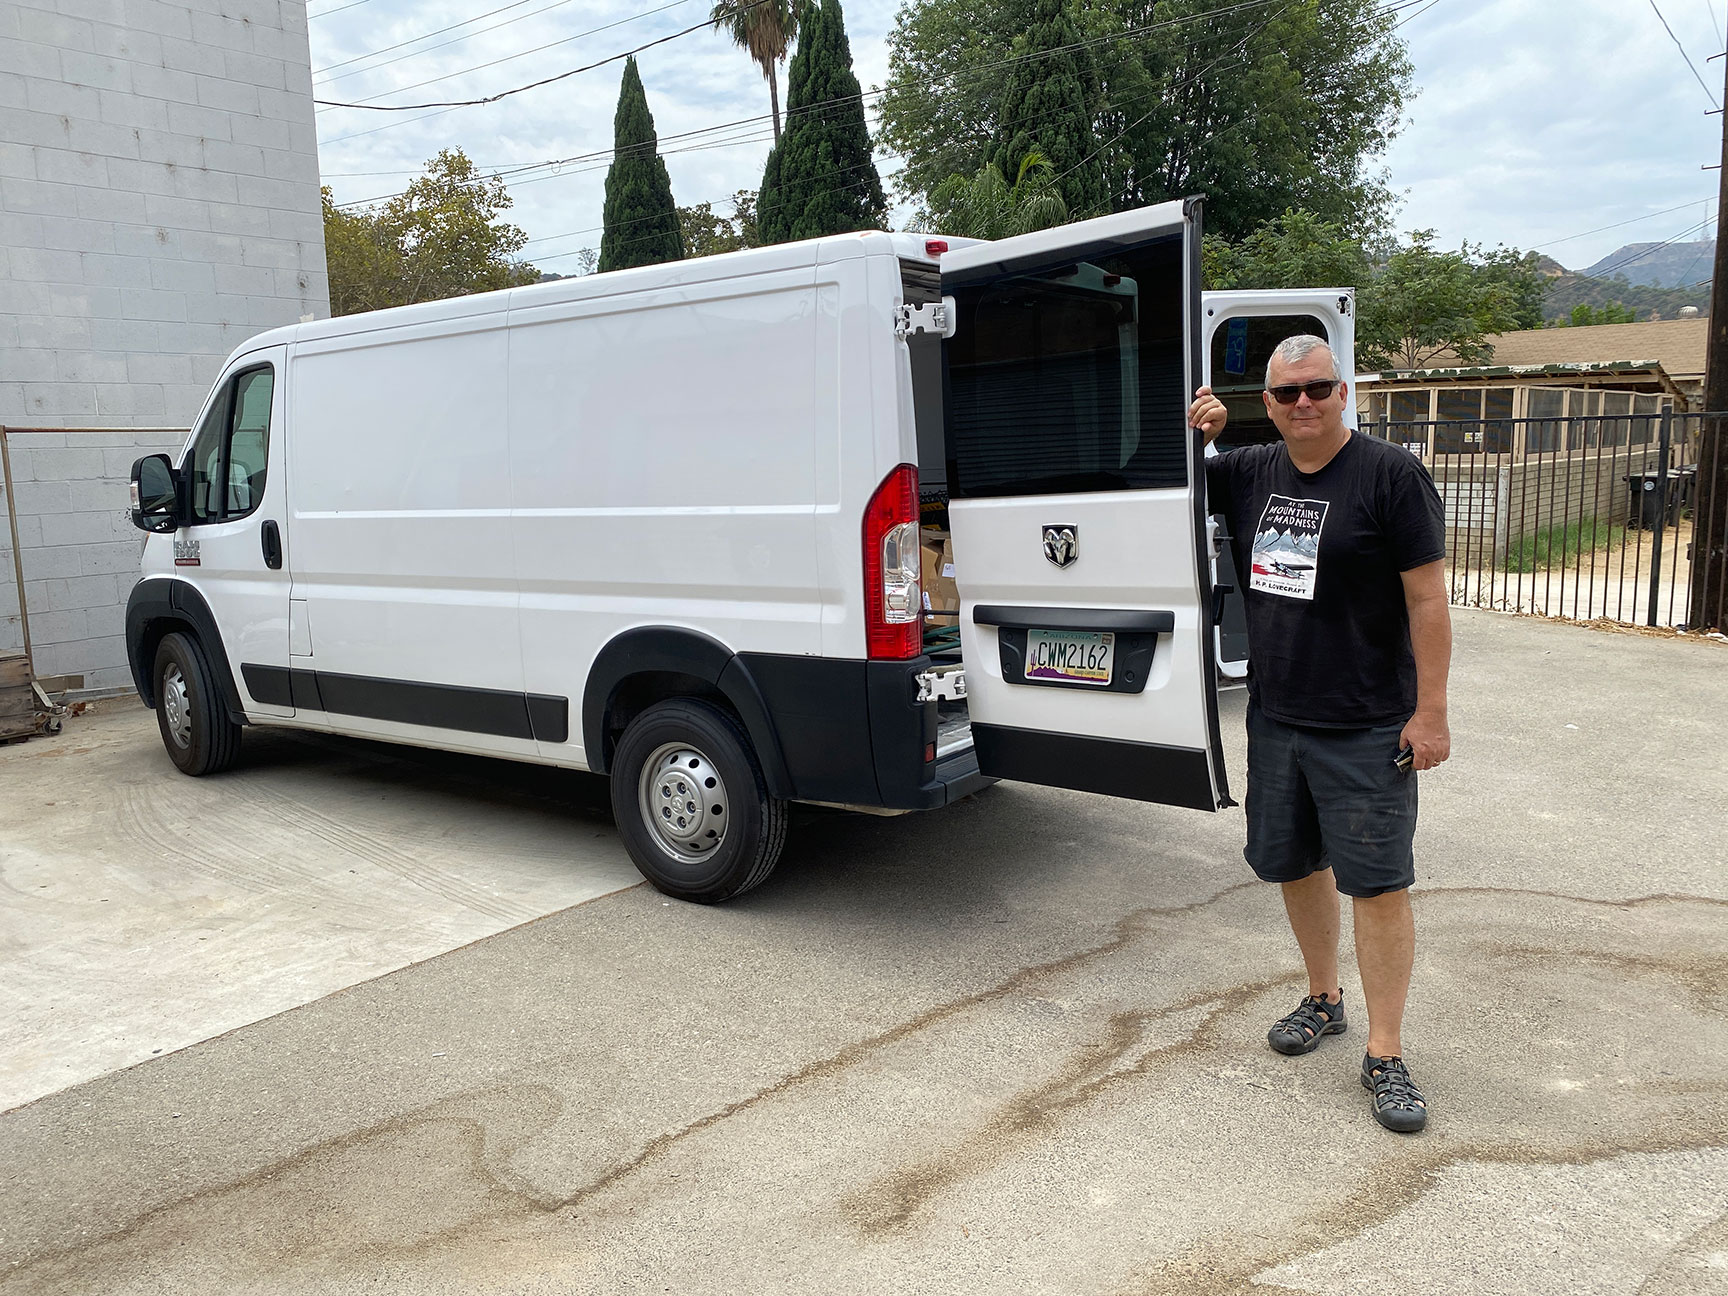 Sean and the van